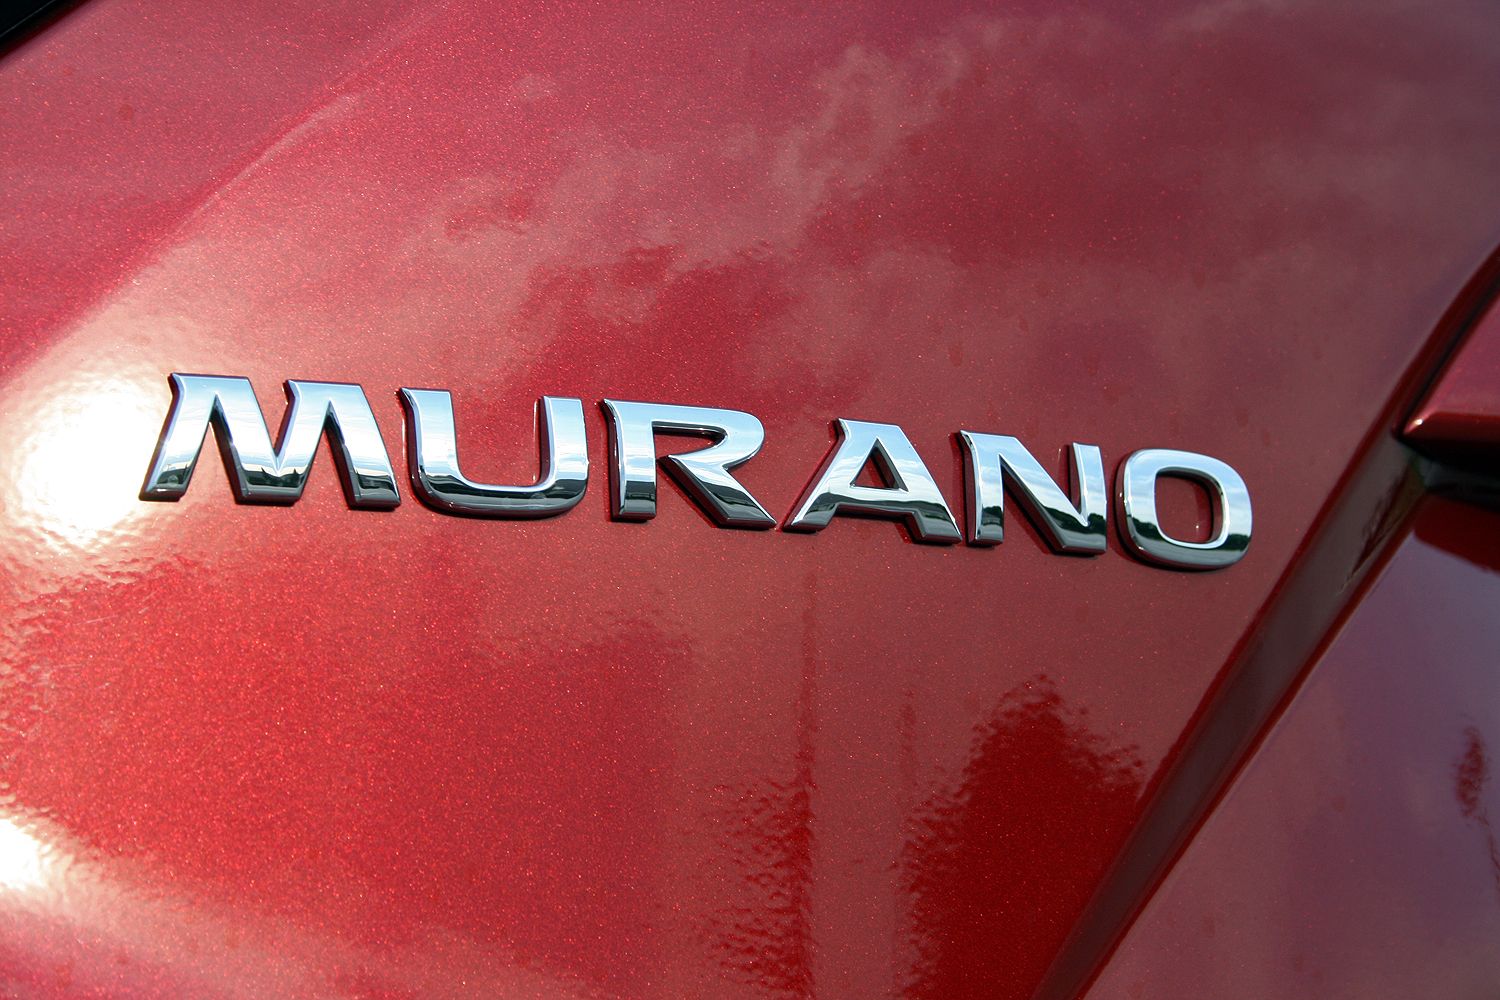 2016 Nissan Murano – Driven